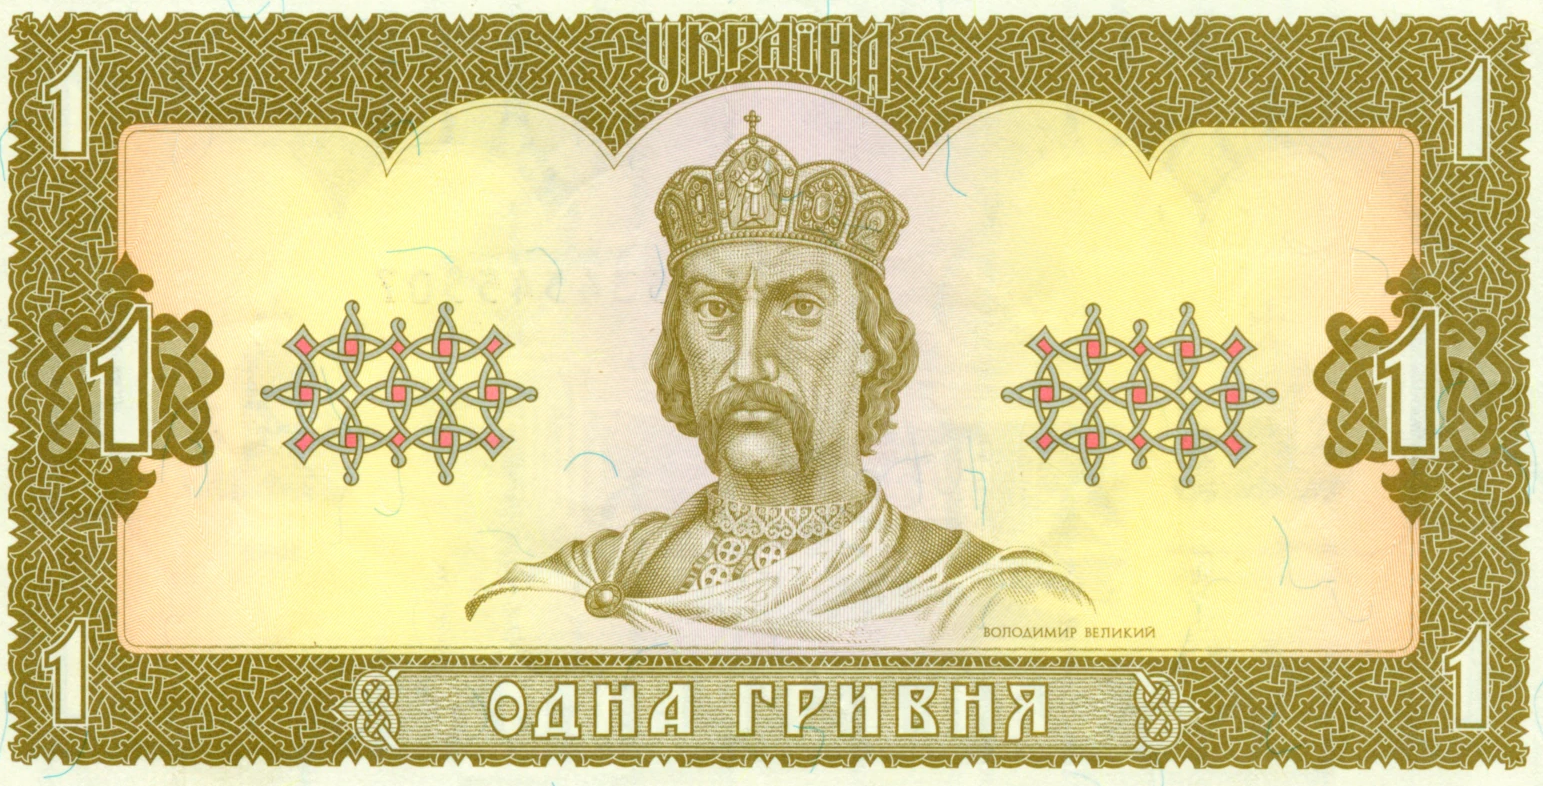 Kyiv princes - bearded or mustachioed? - Rus, Ancient Russia, Kievan Rus, Усы, Appearance, Longpost